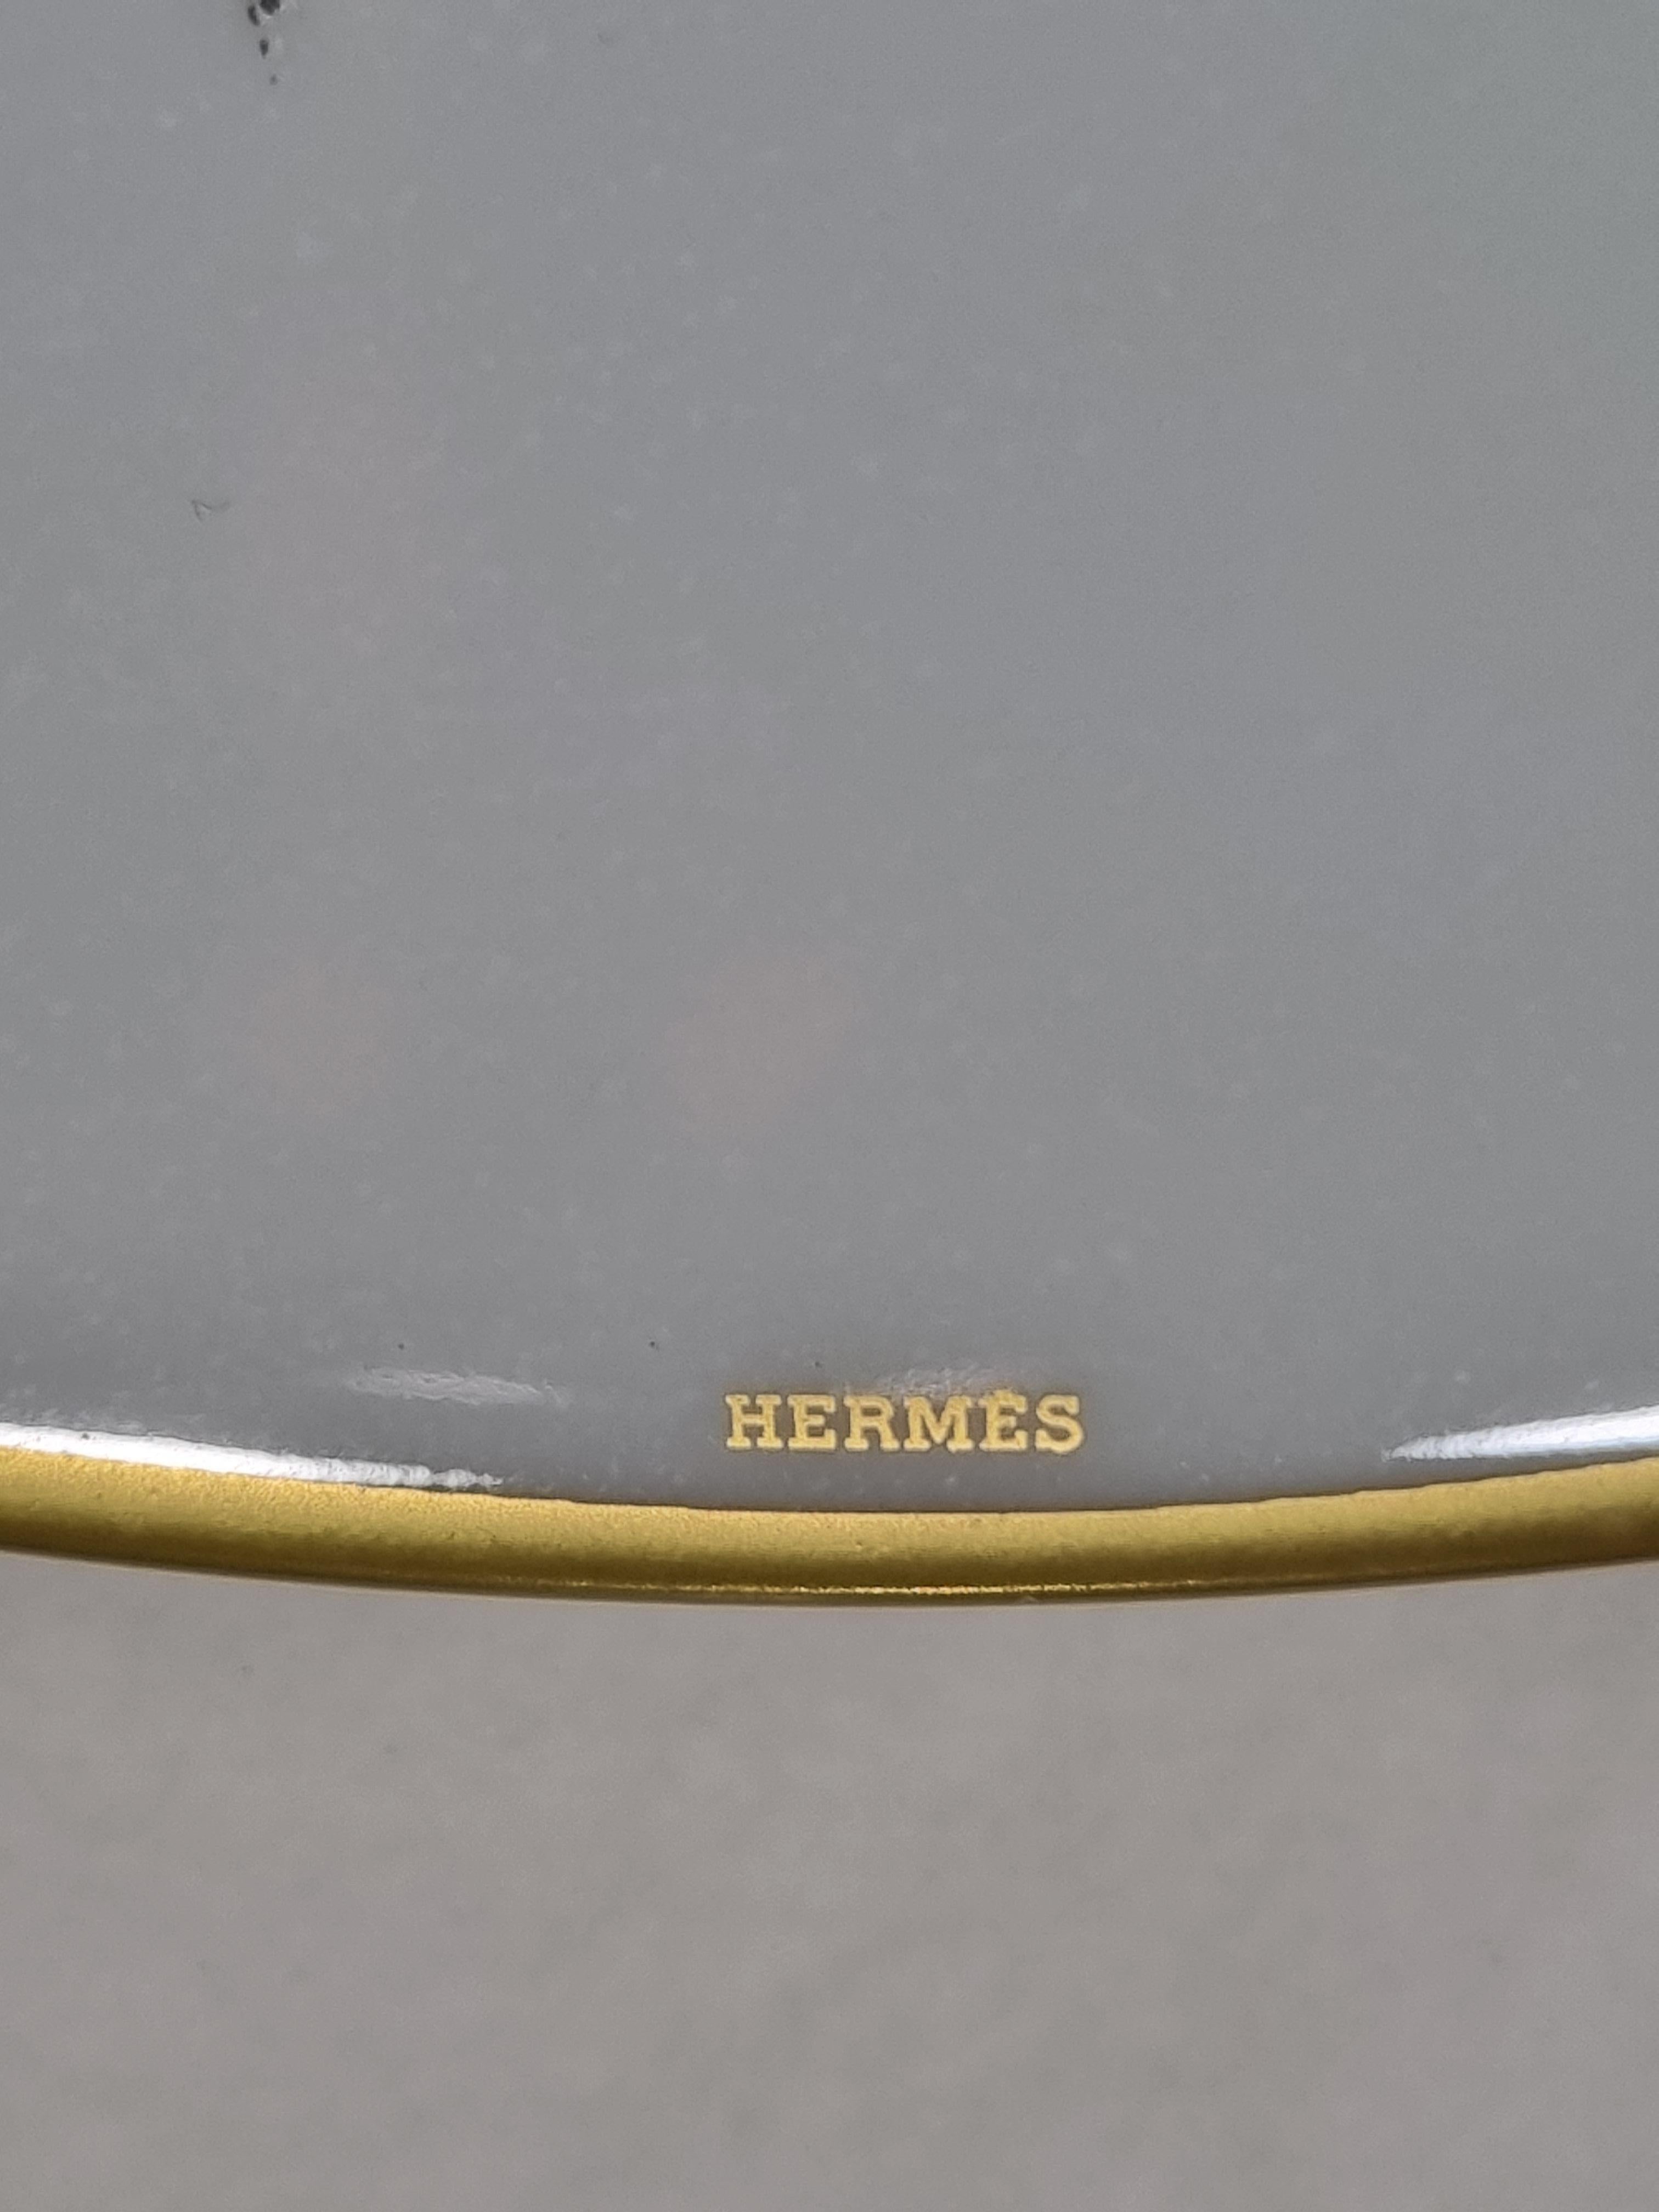 hermes plate set